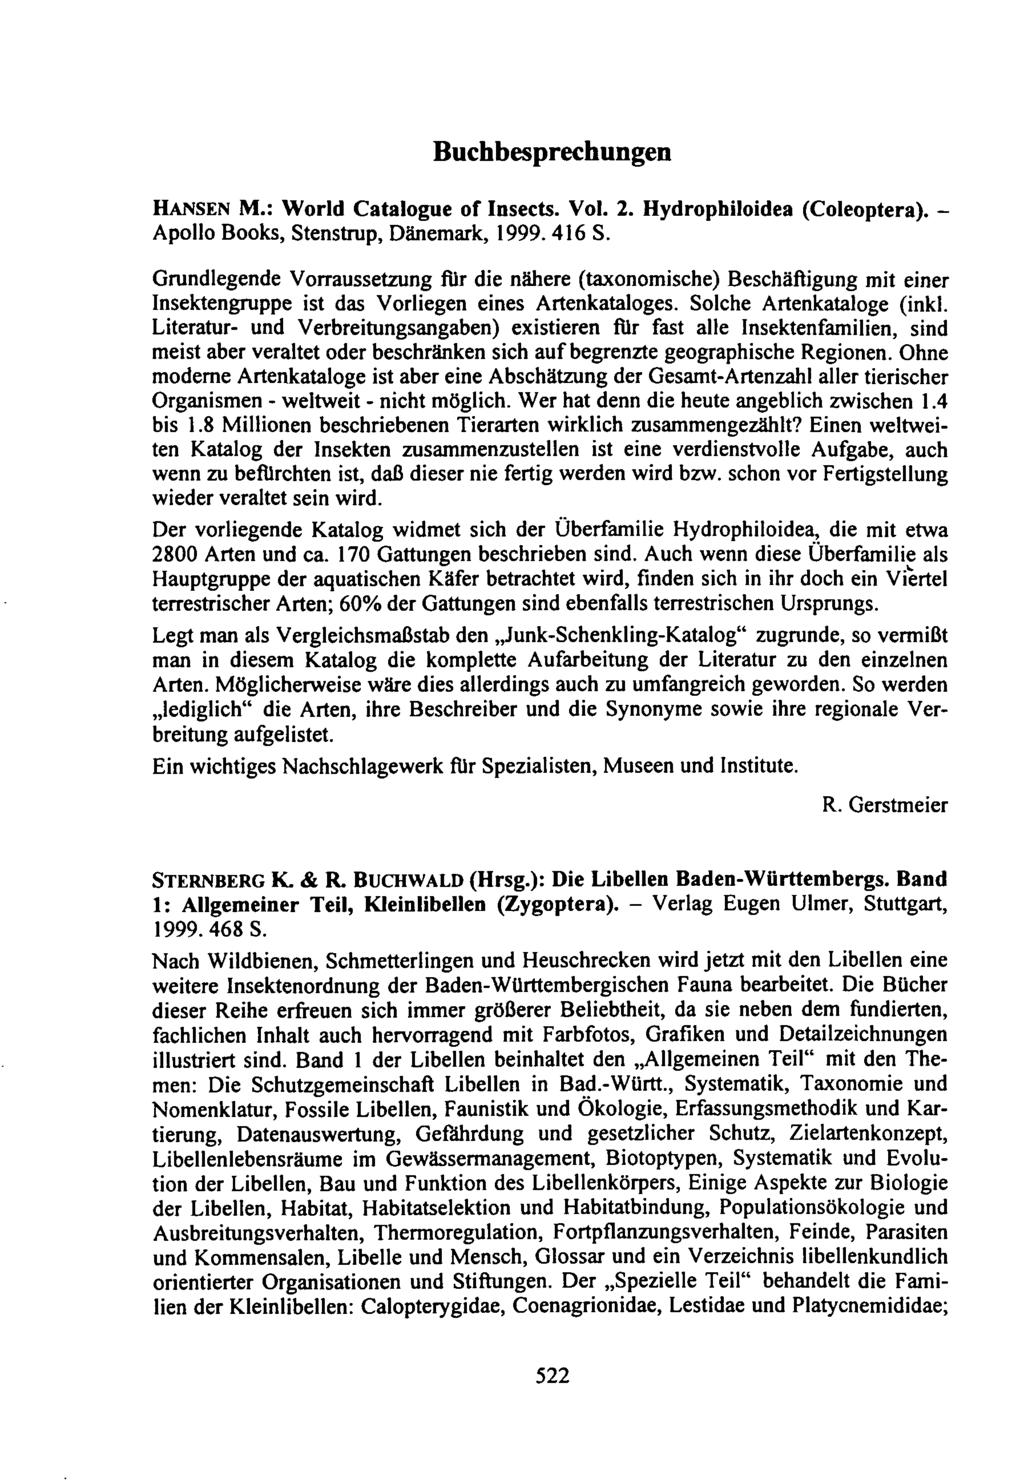 Buchbesprechungen HANSEN M.: World Catalogue of Insects. Vol. 2. Hydrophiloidea (Coleoptera). - Apollo Books, Stenstrup, Dänemark, 1999.416 S.